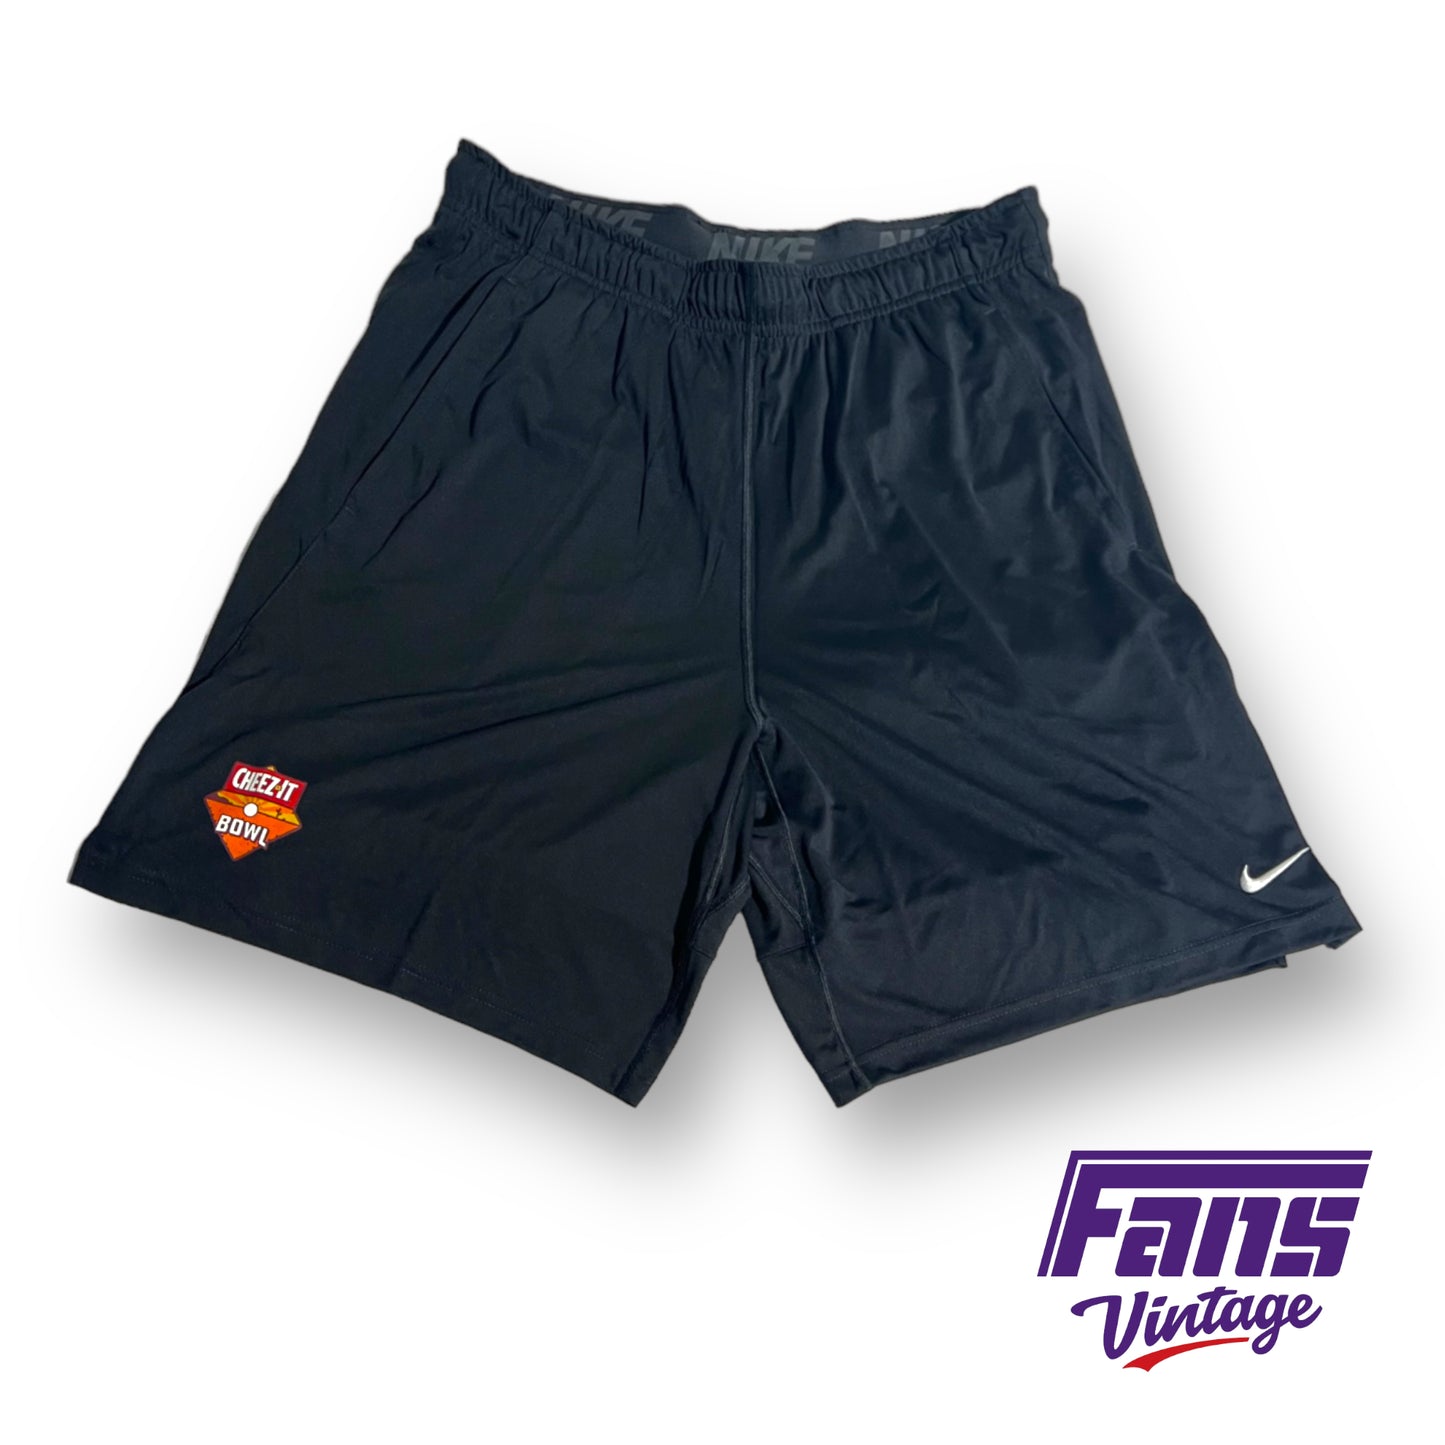 Nike TCU Cheez It Bowl team issued shorts